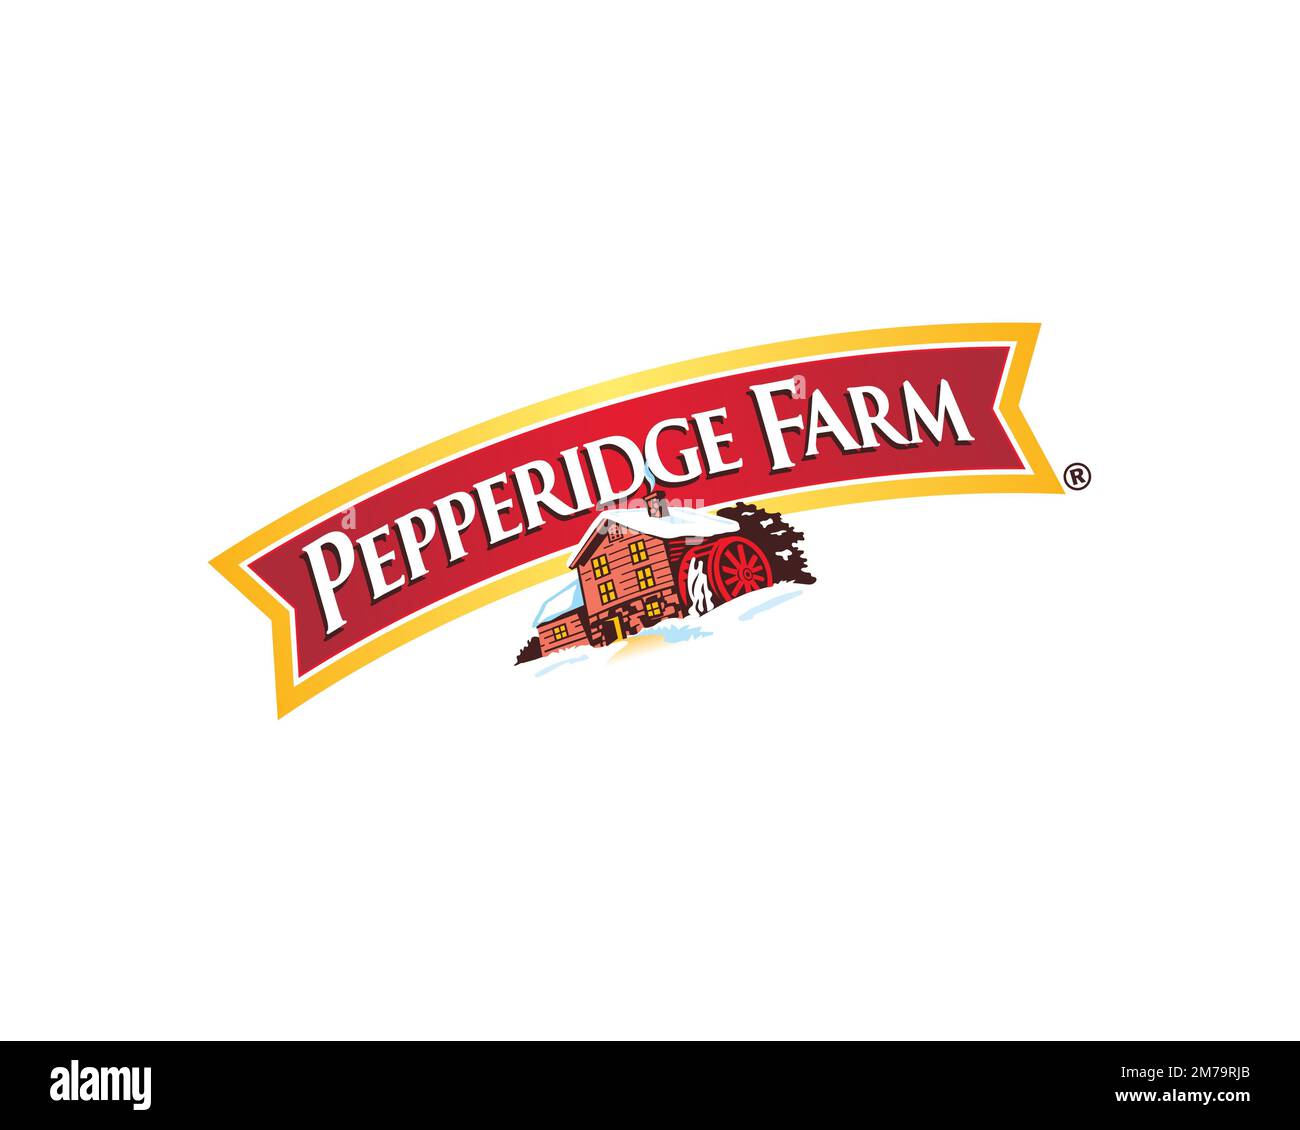 Pepperidge Farm, Rotated Logo, White Background Stock Photo - Alamy